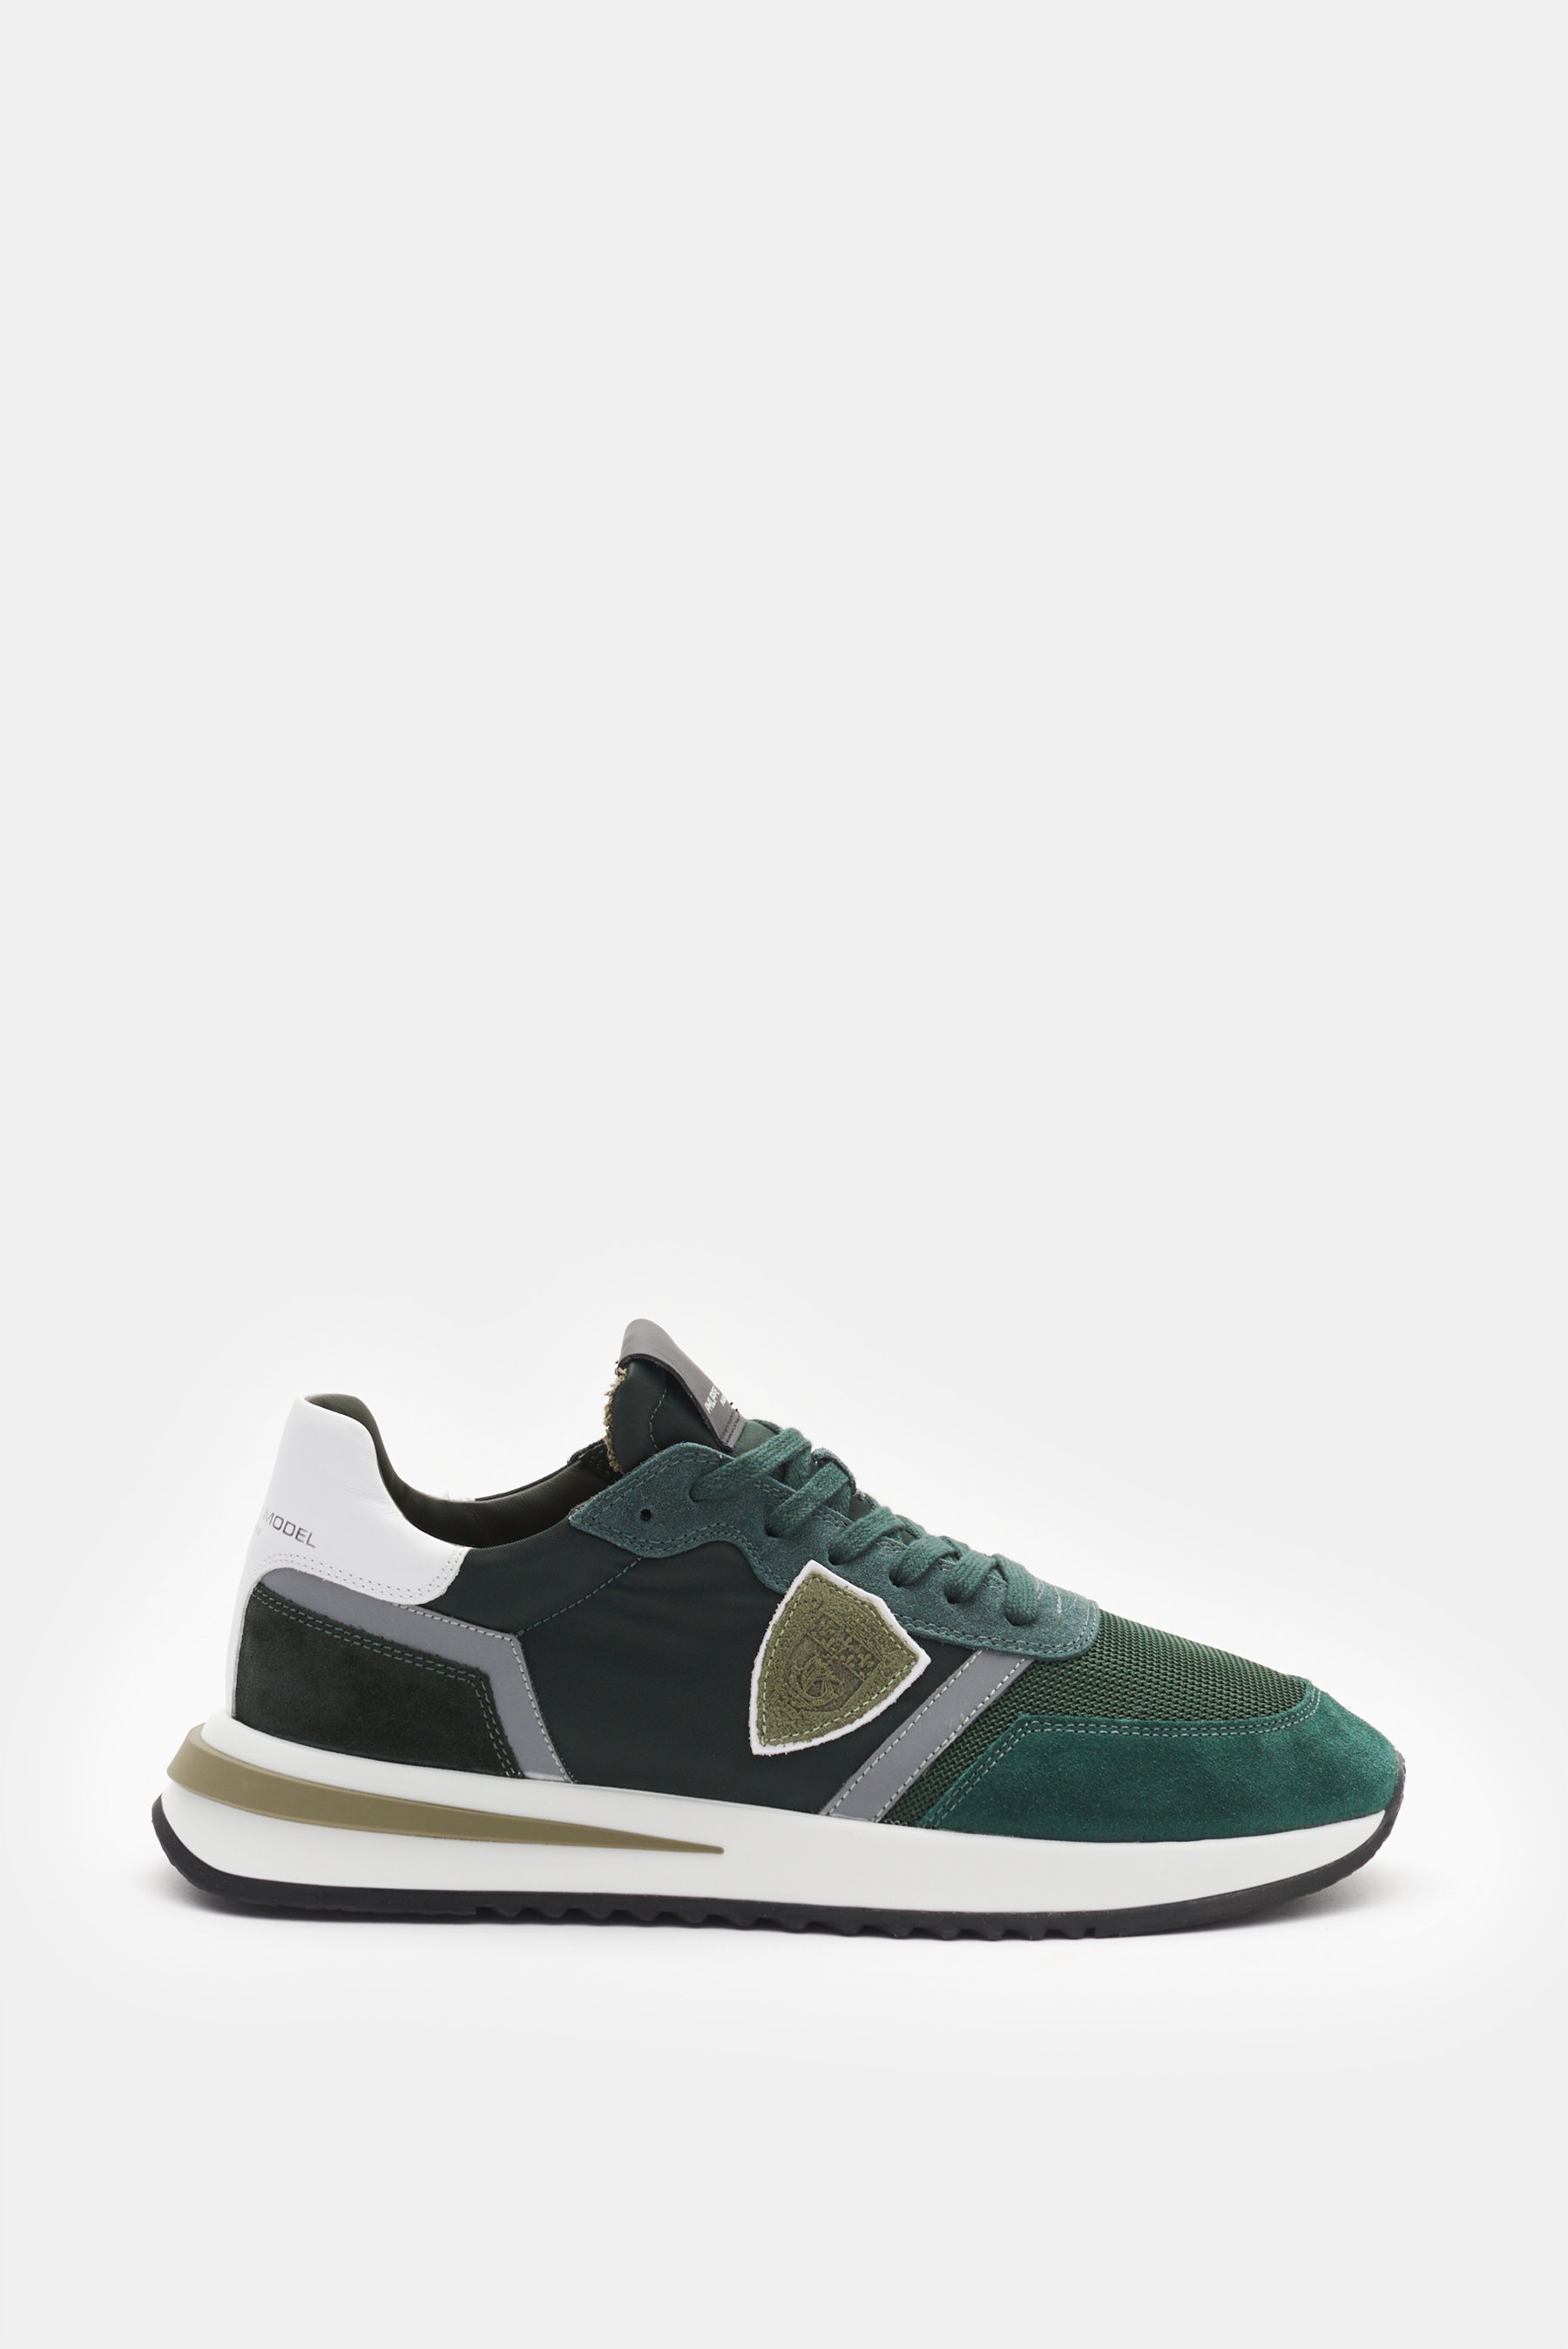 Philippe Model  - Herren - Sneaker 'Tropez 2.1' dunkelgrün